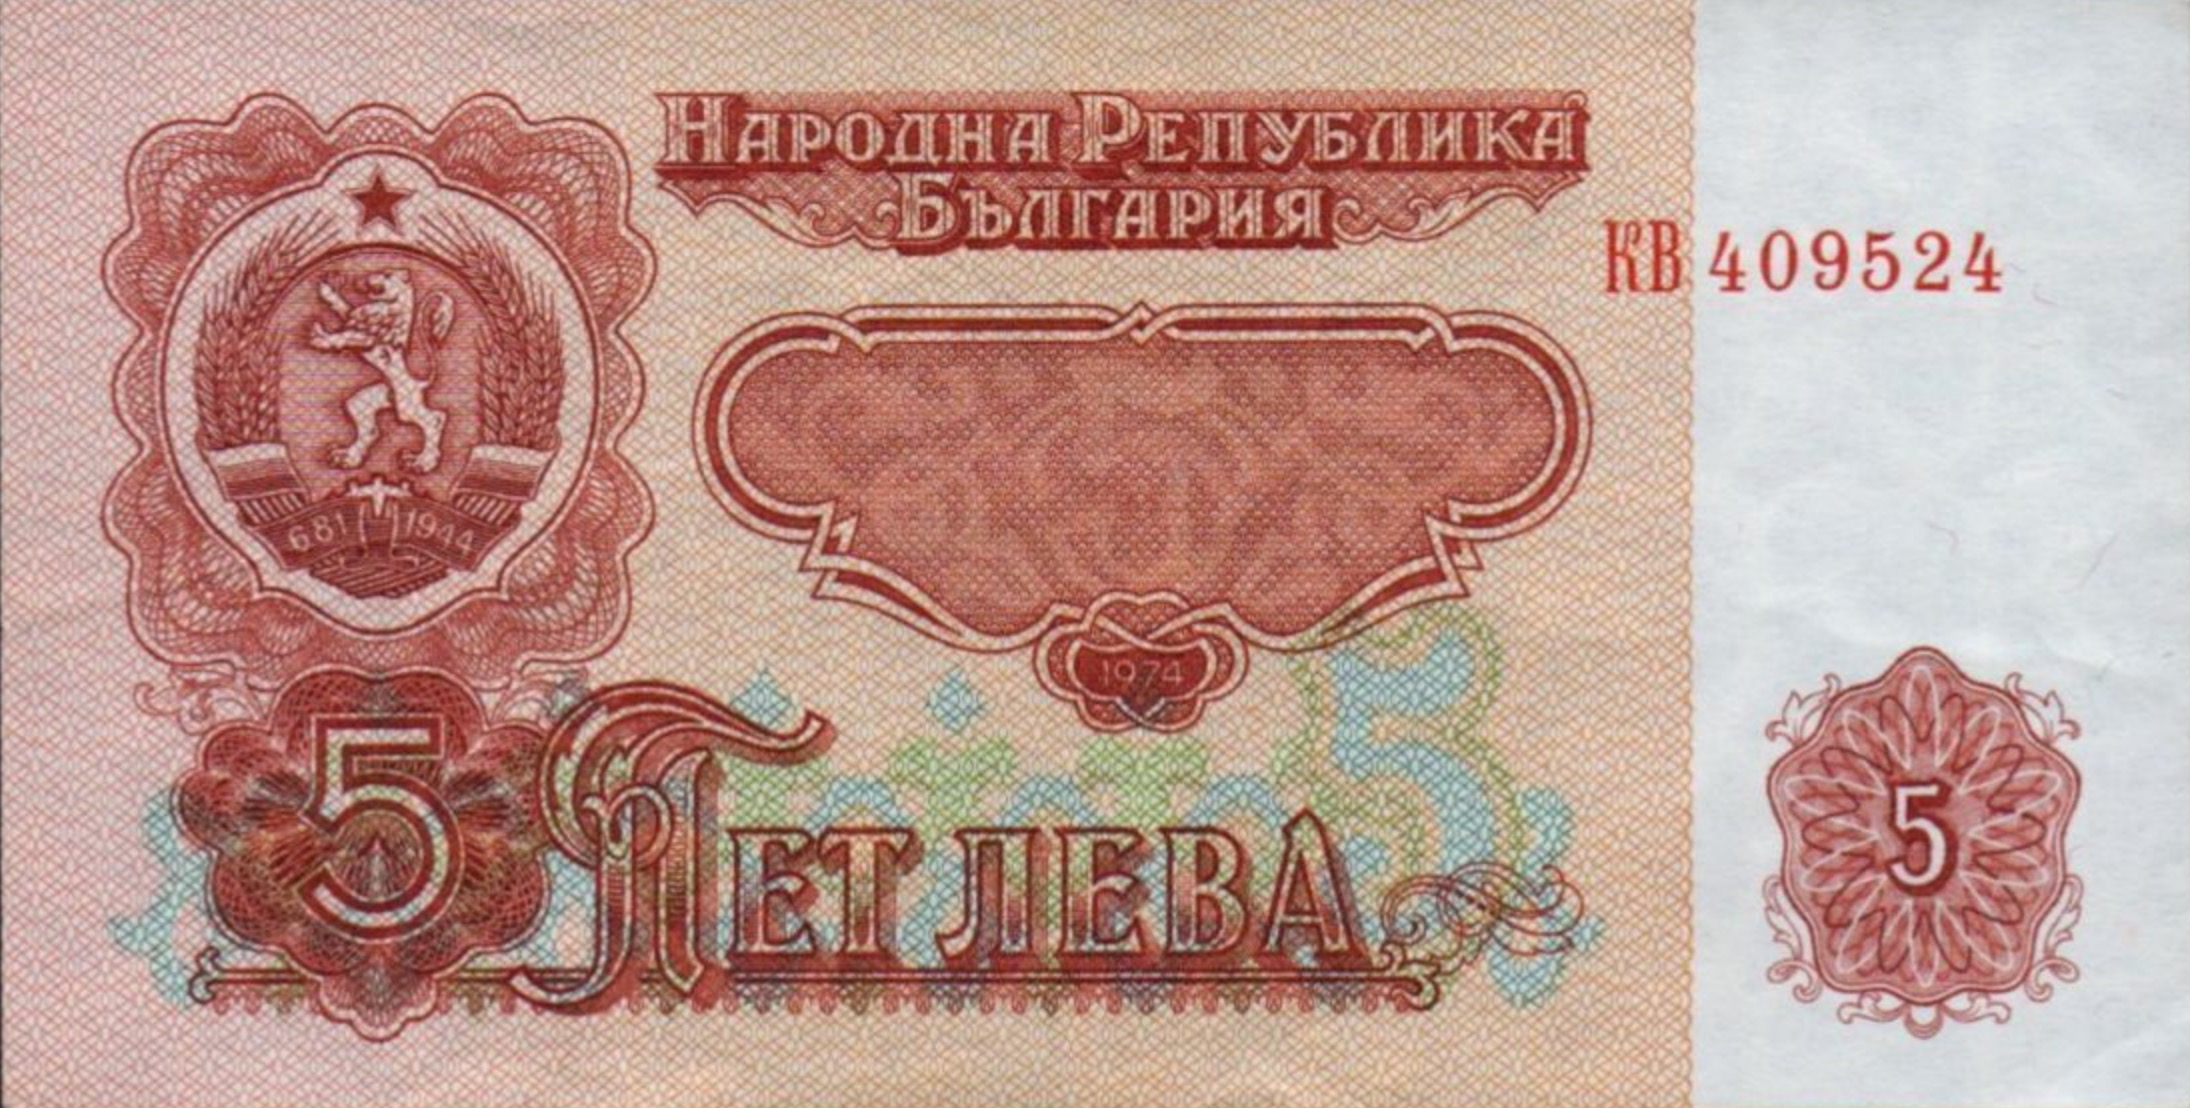 5 old Leva banknote Bulgaria